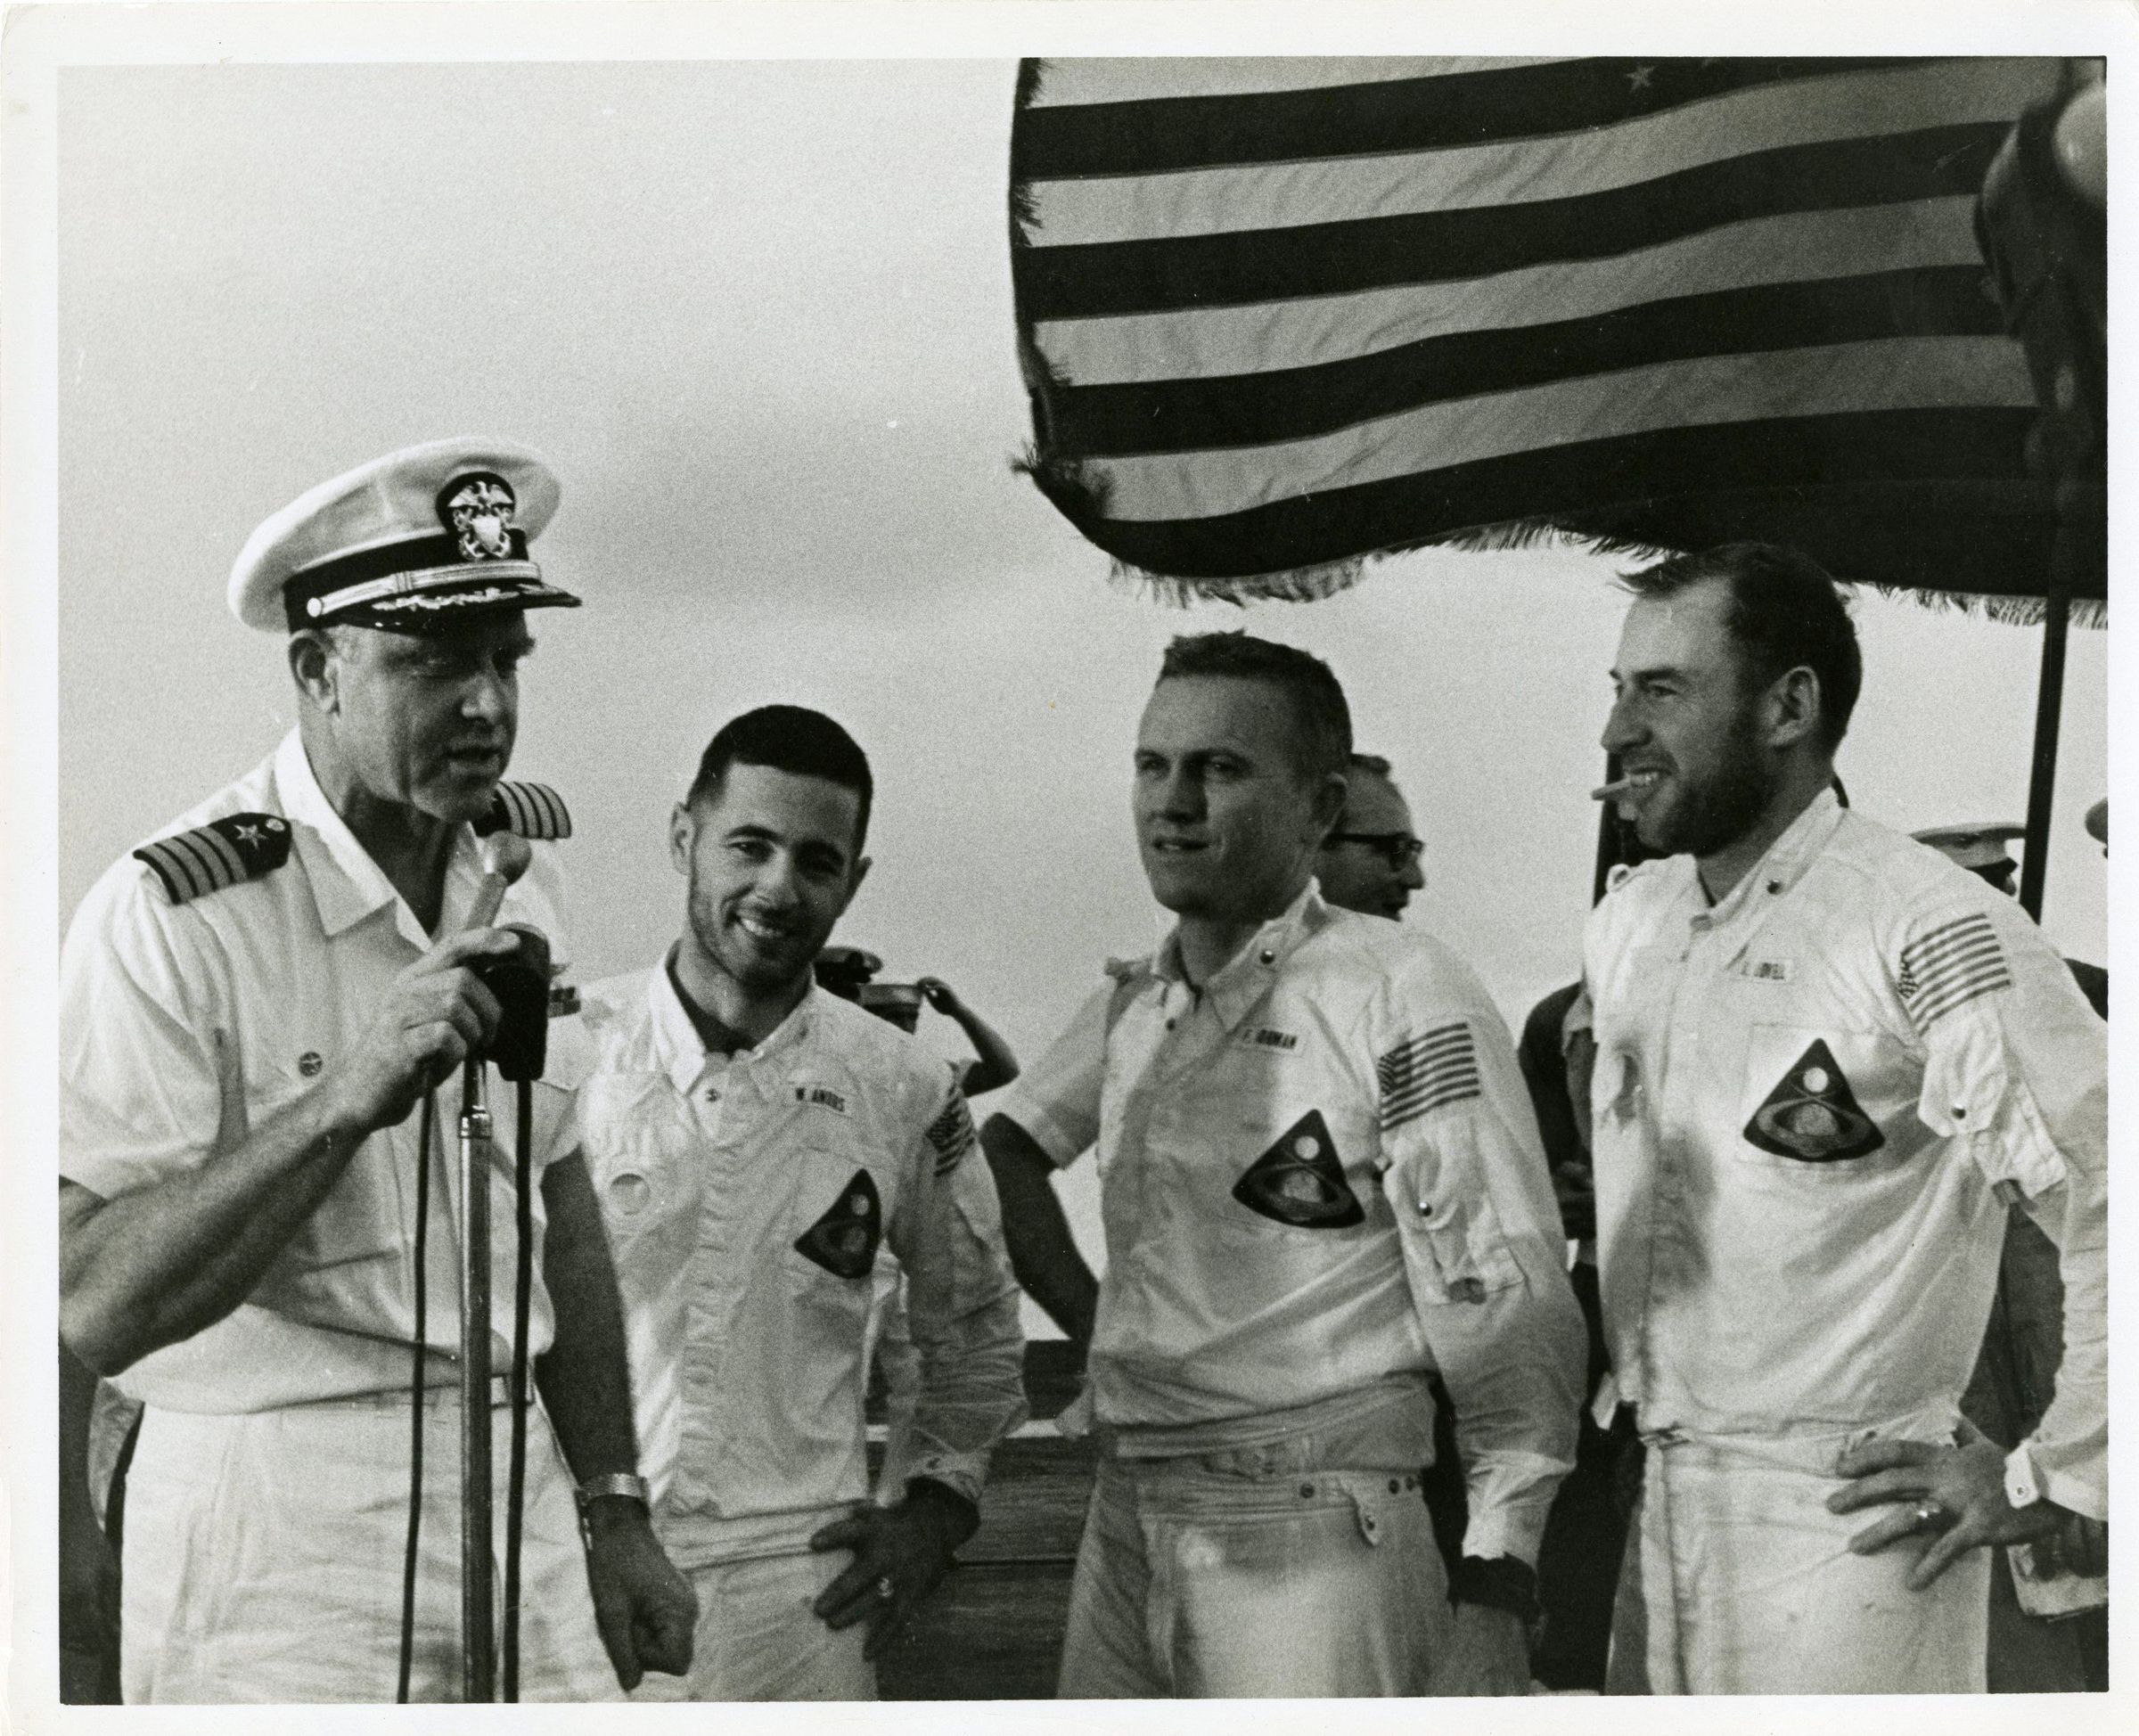 Primary Image of Captain John Fifield Welcomes the Apollo 8 Crewmen Aboard The USS Yorktown (CVS-10)